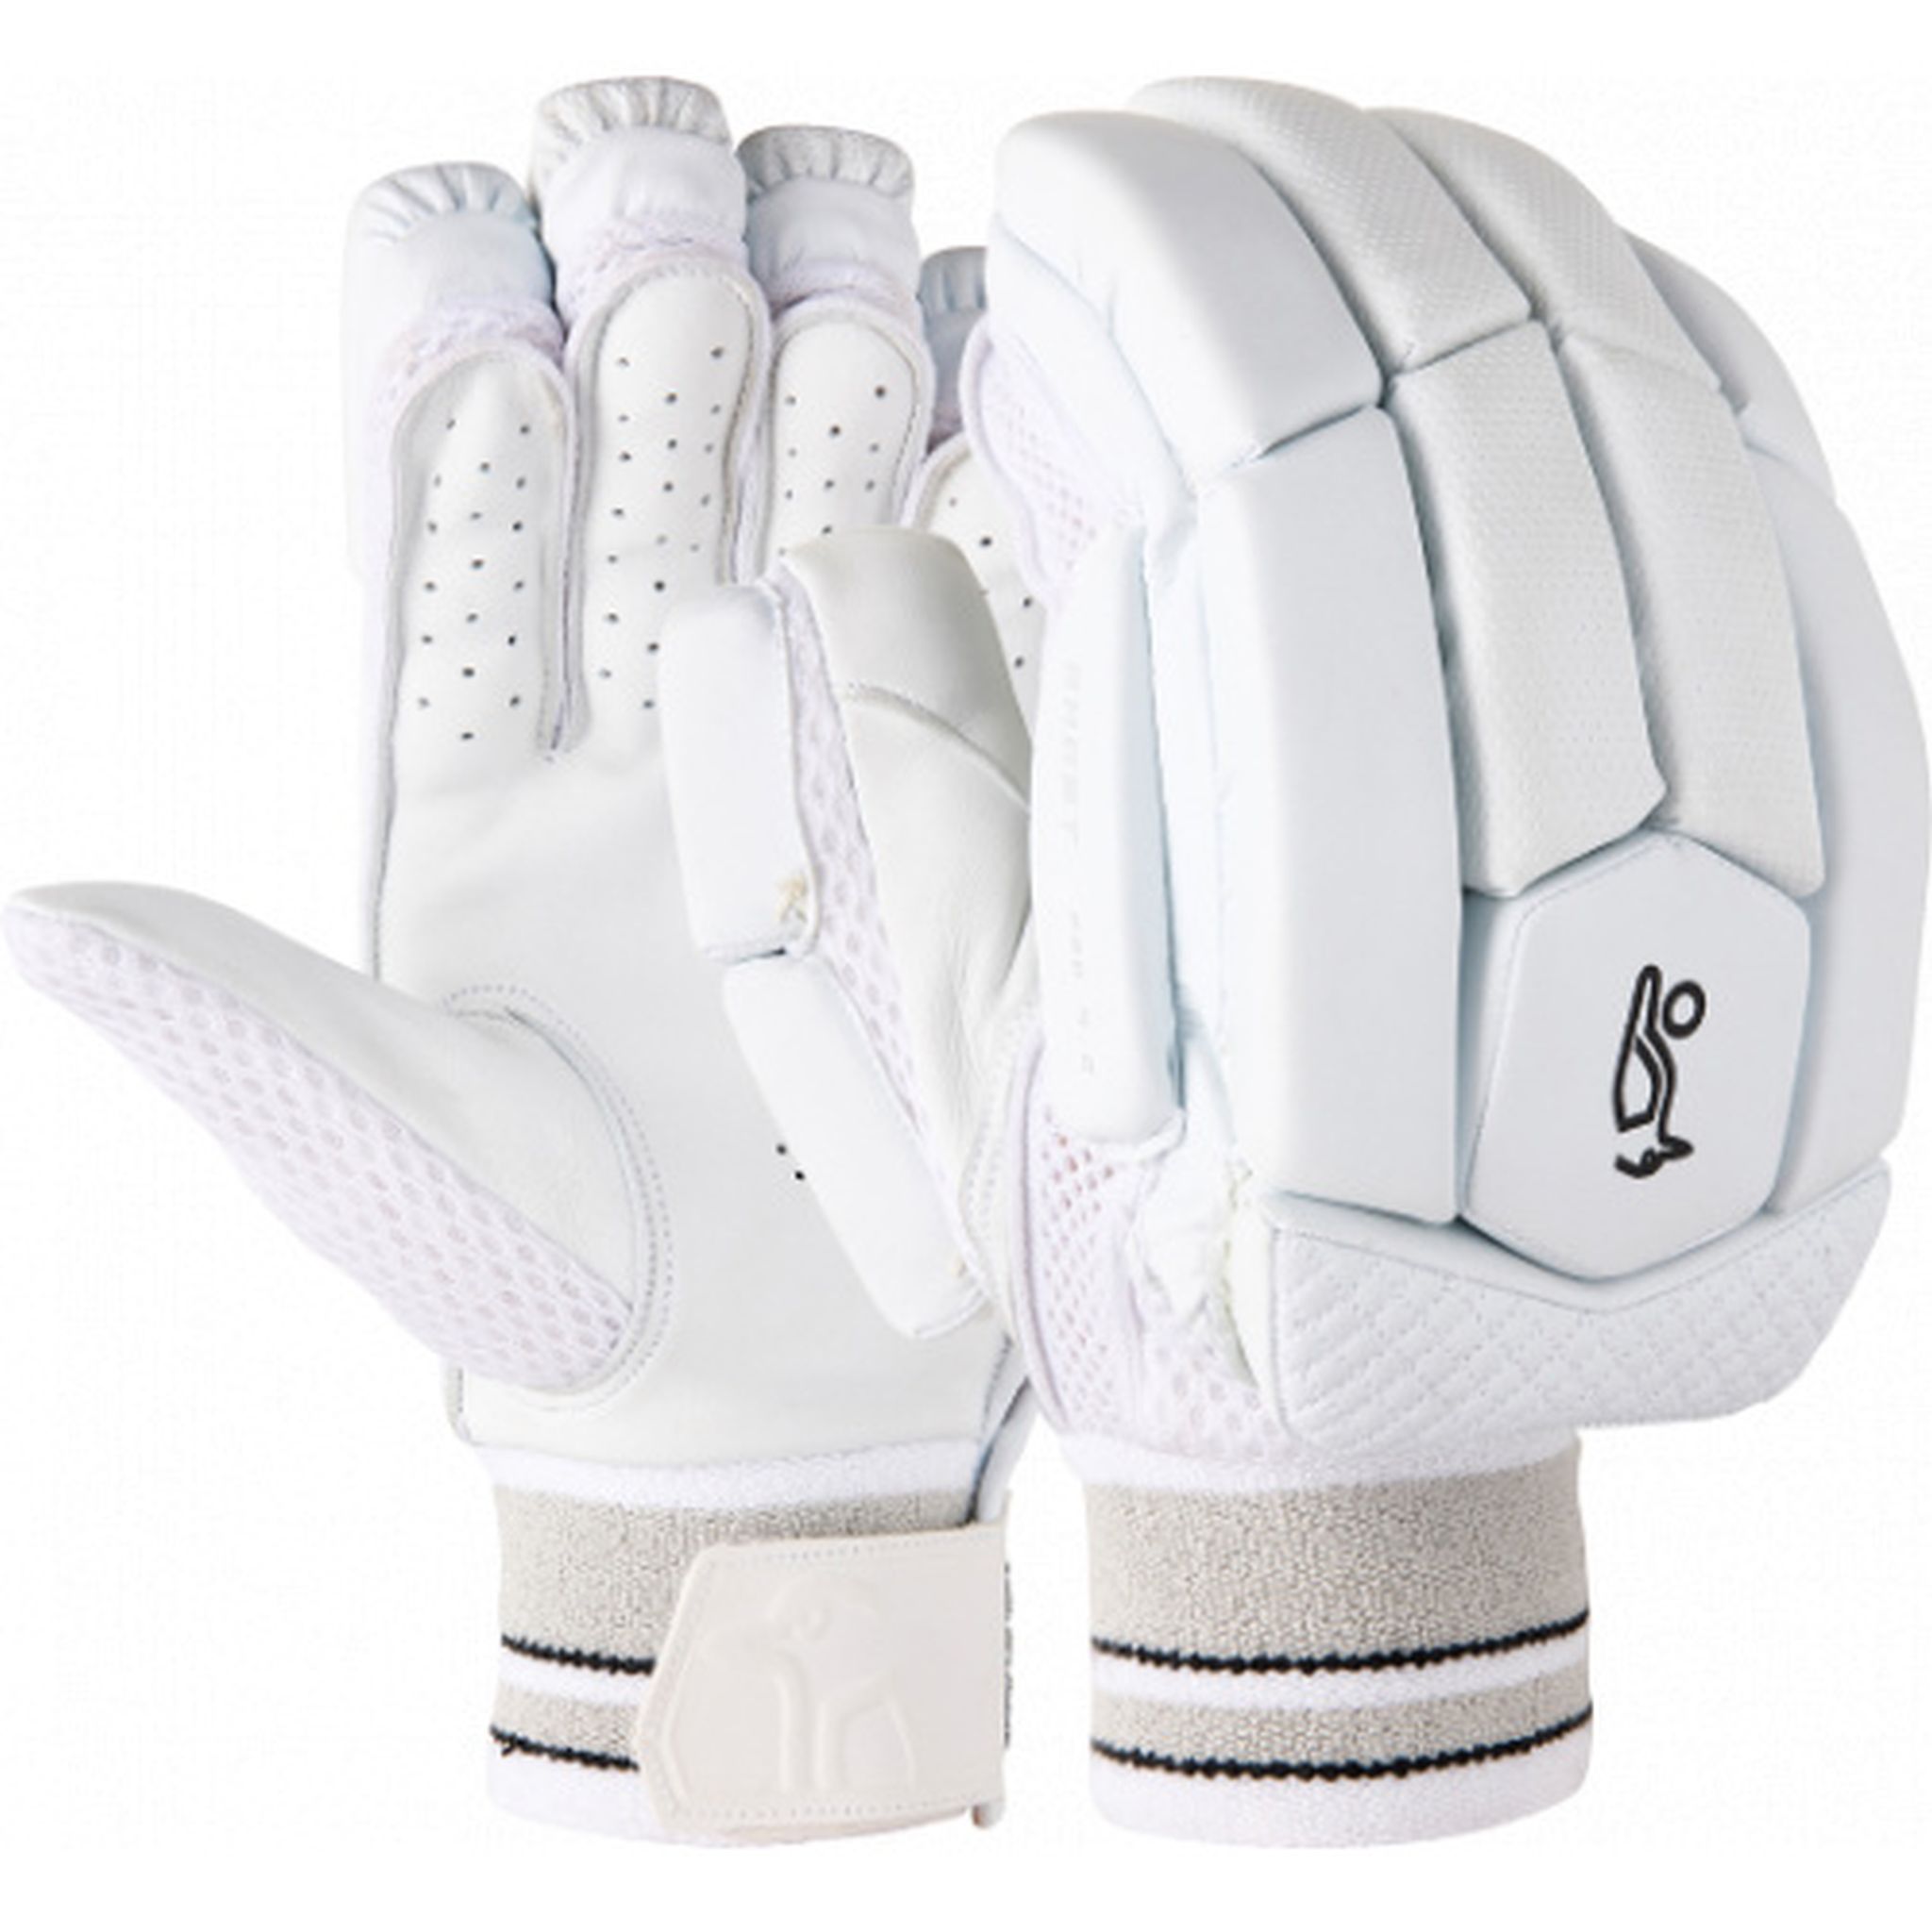 Kookaburra Ghost Pro 4.0 Adults Batting Gloves